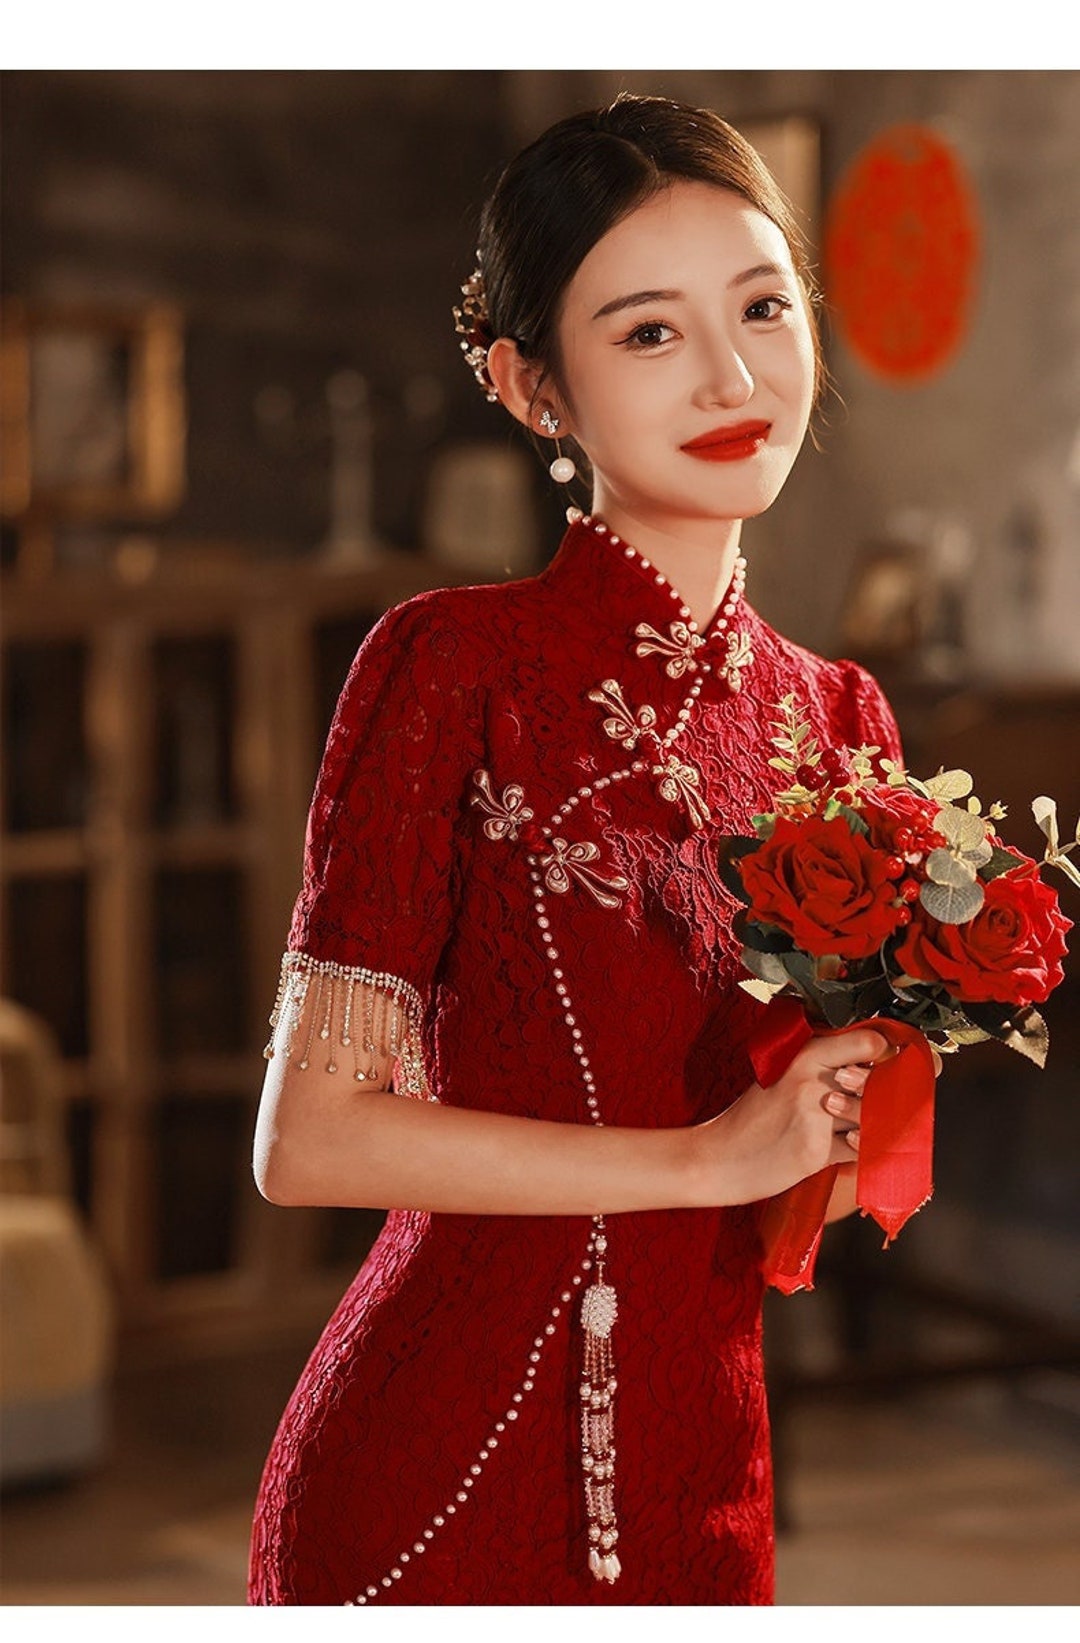 Tea Ceremony Dress. Chinese Wedding Dress. Wine Red Qipao - Etsy